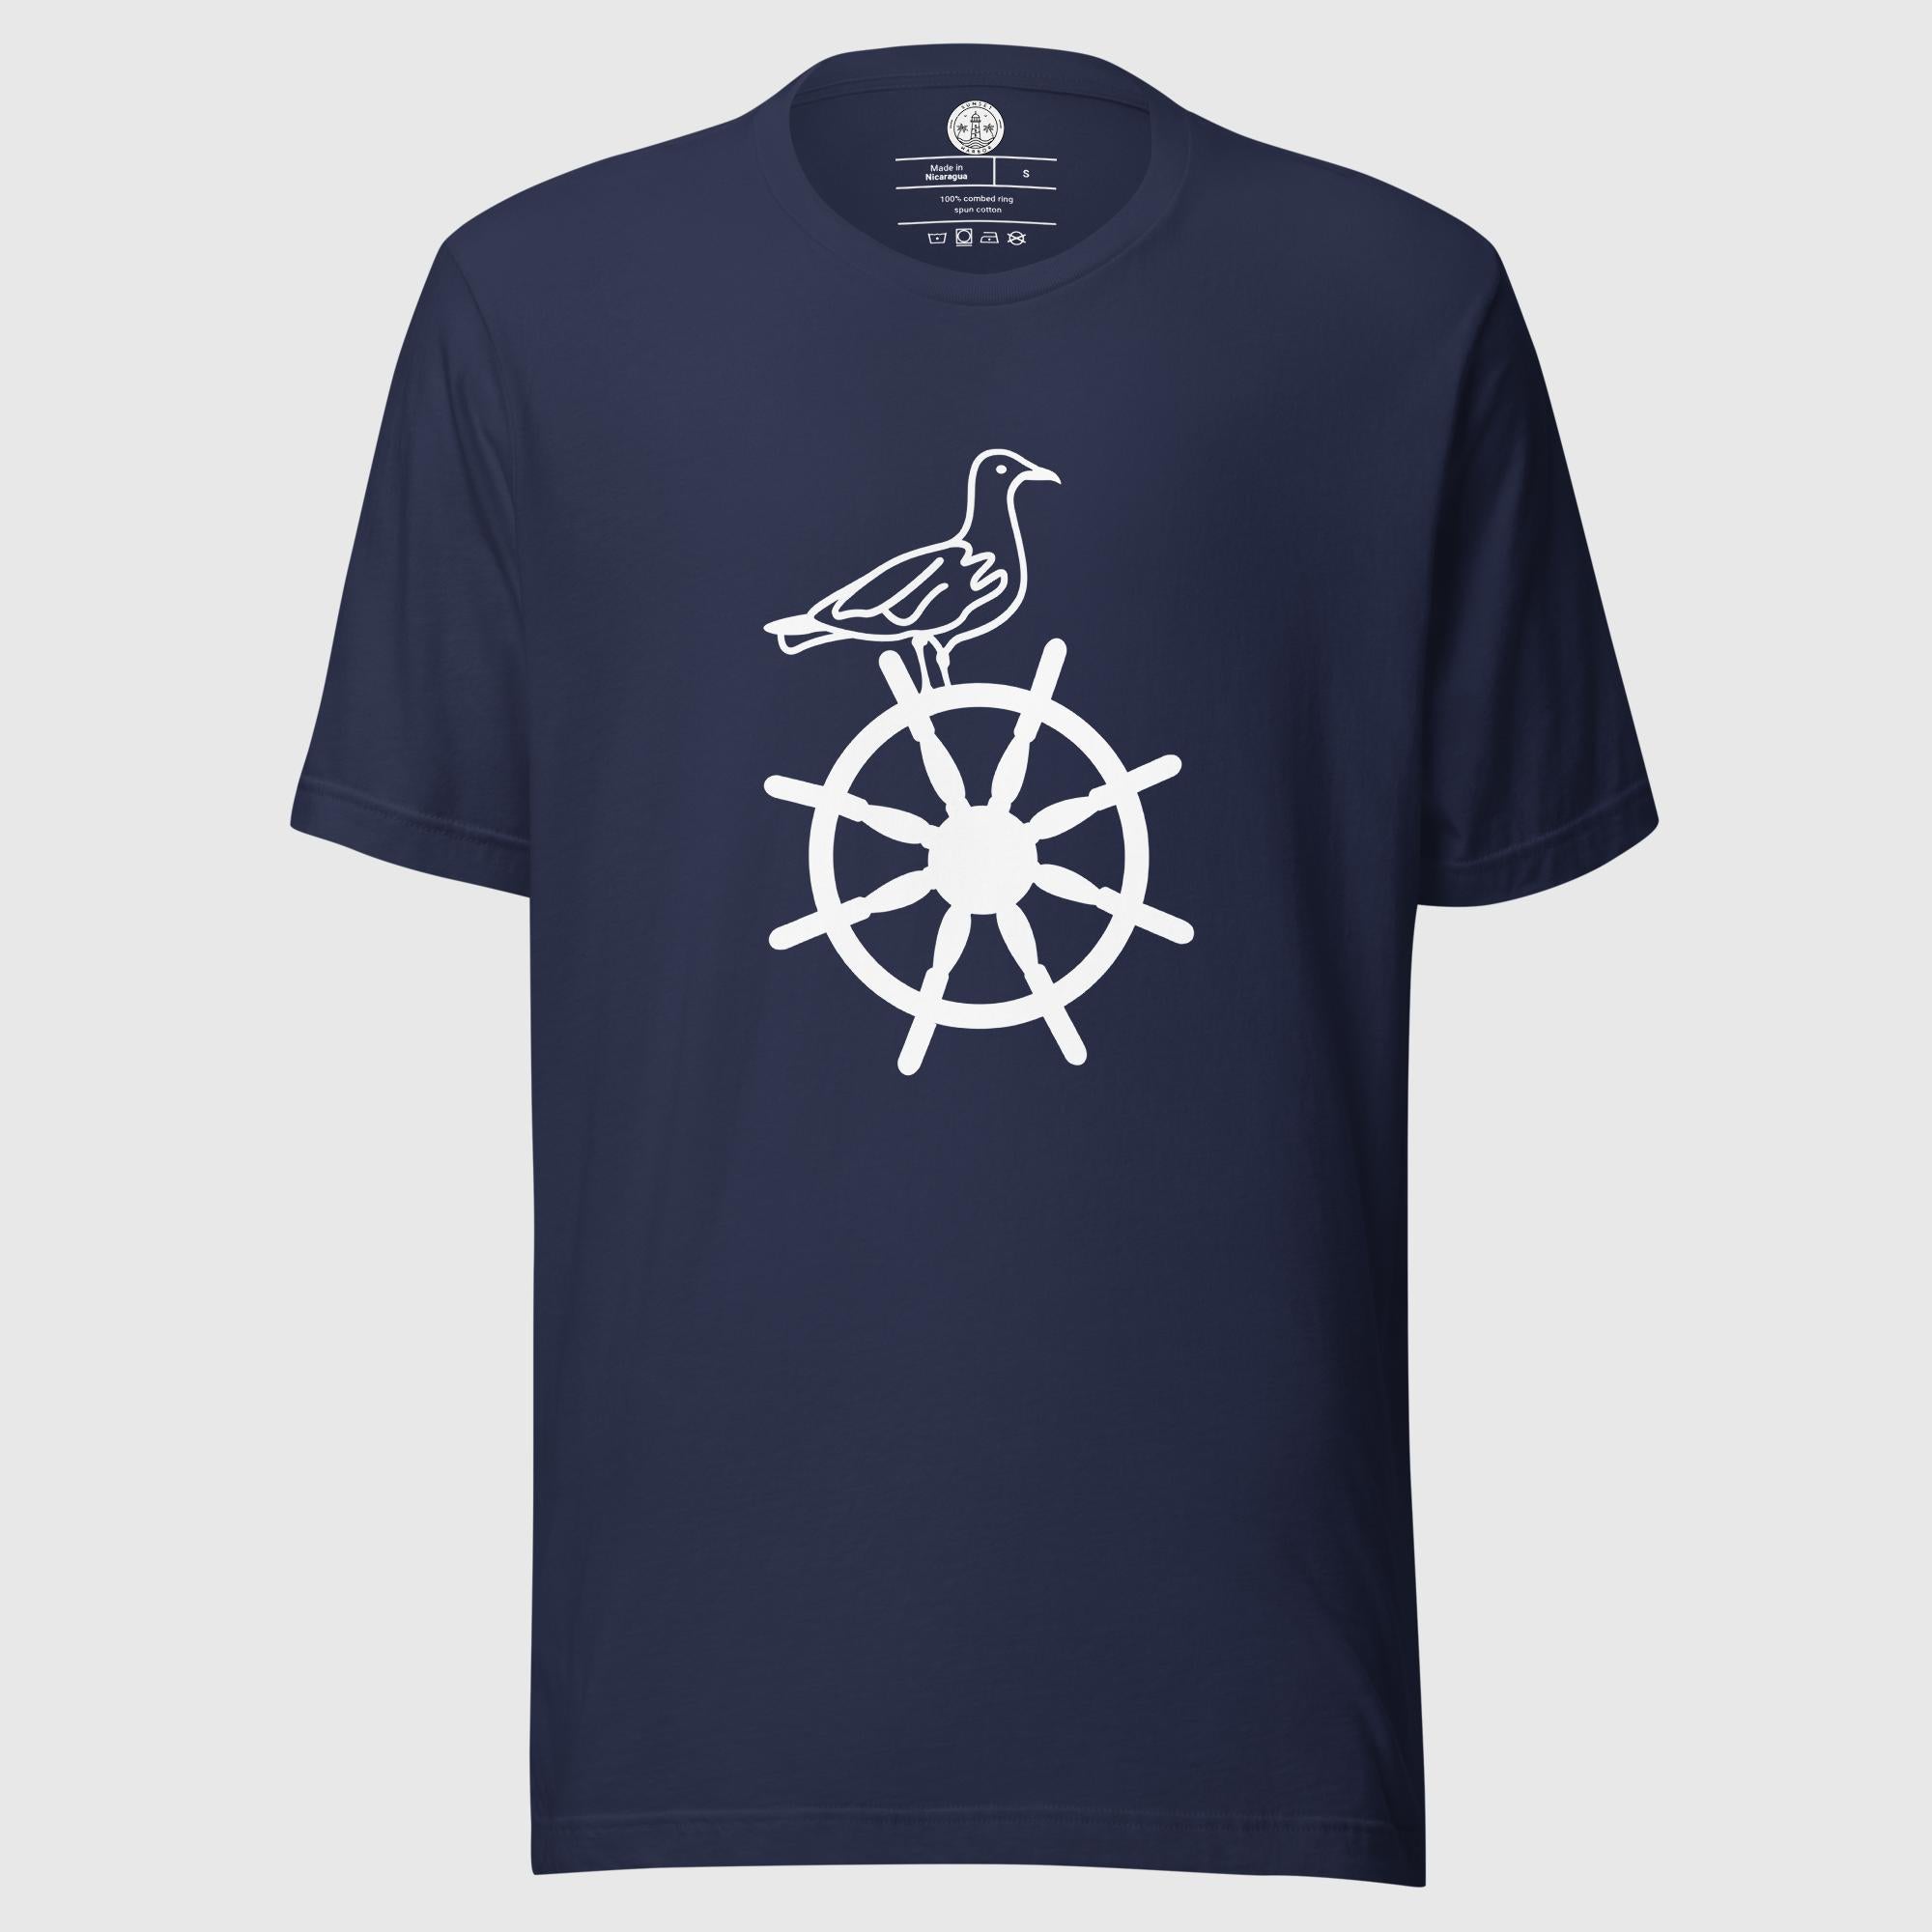 Unisex Staple T-Shirt - Naval - Sunset Harbor Clothing